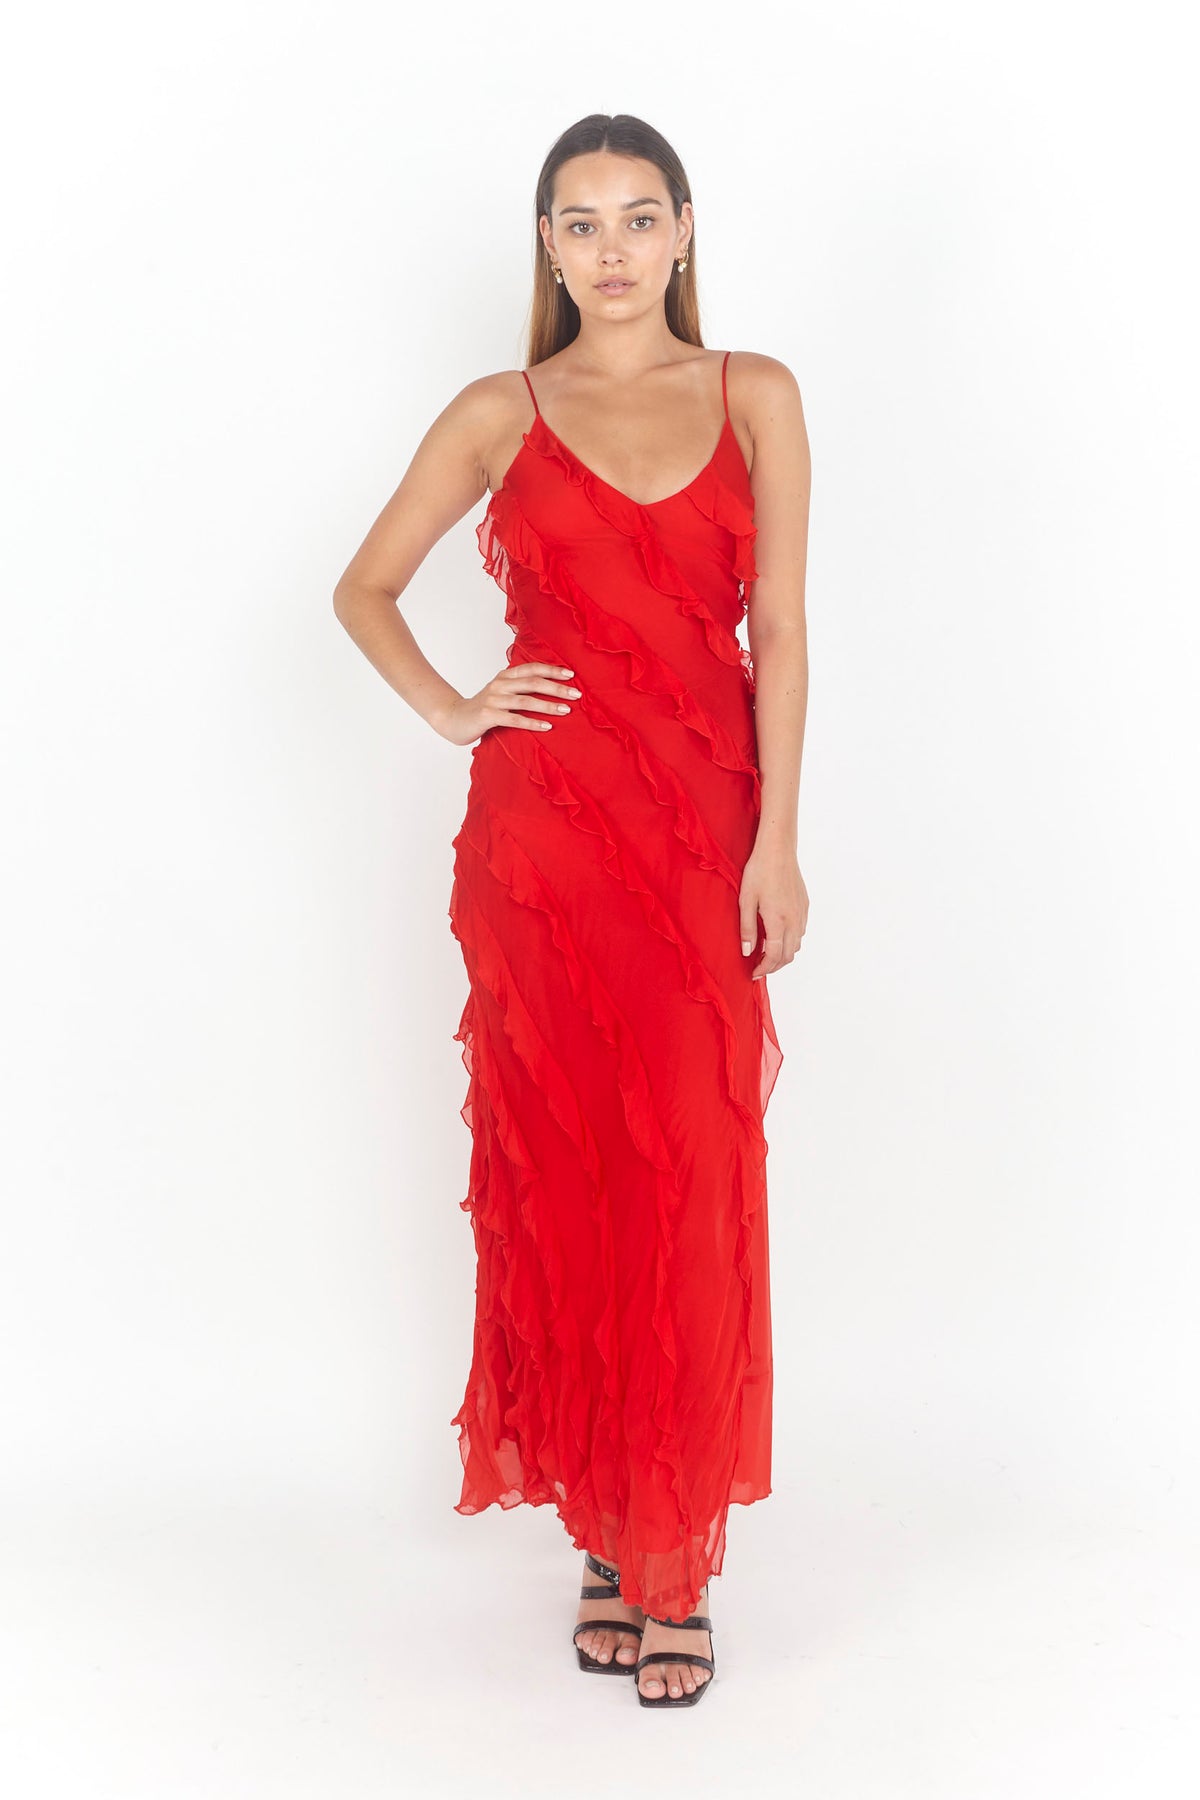 Rat & Boa - Cecelia Red Dress | All The Dresses